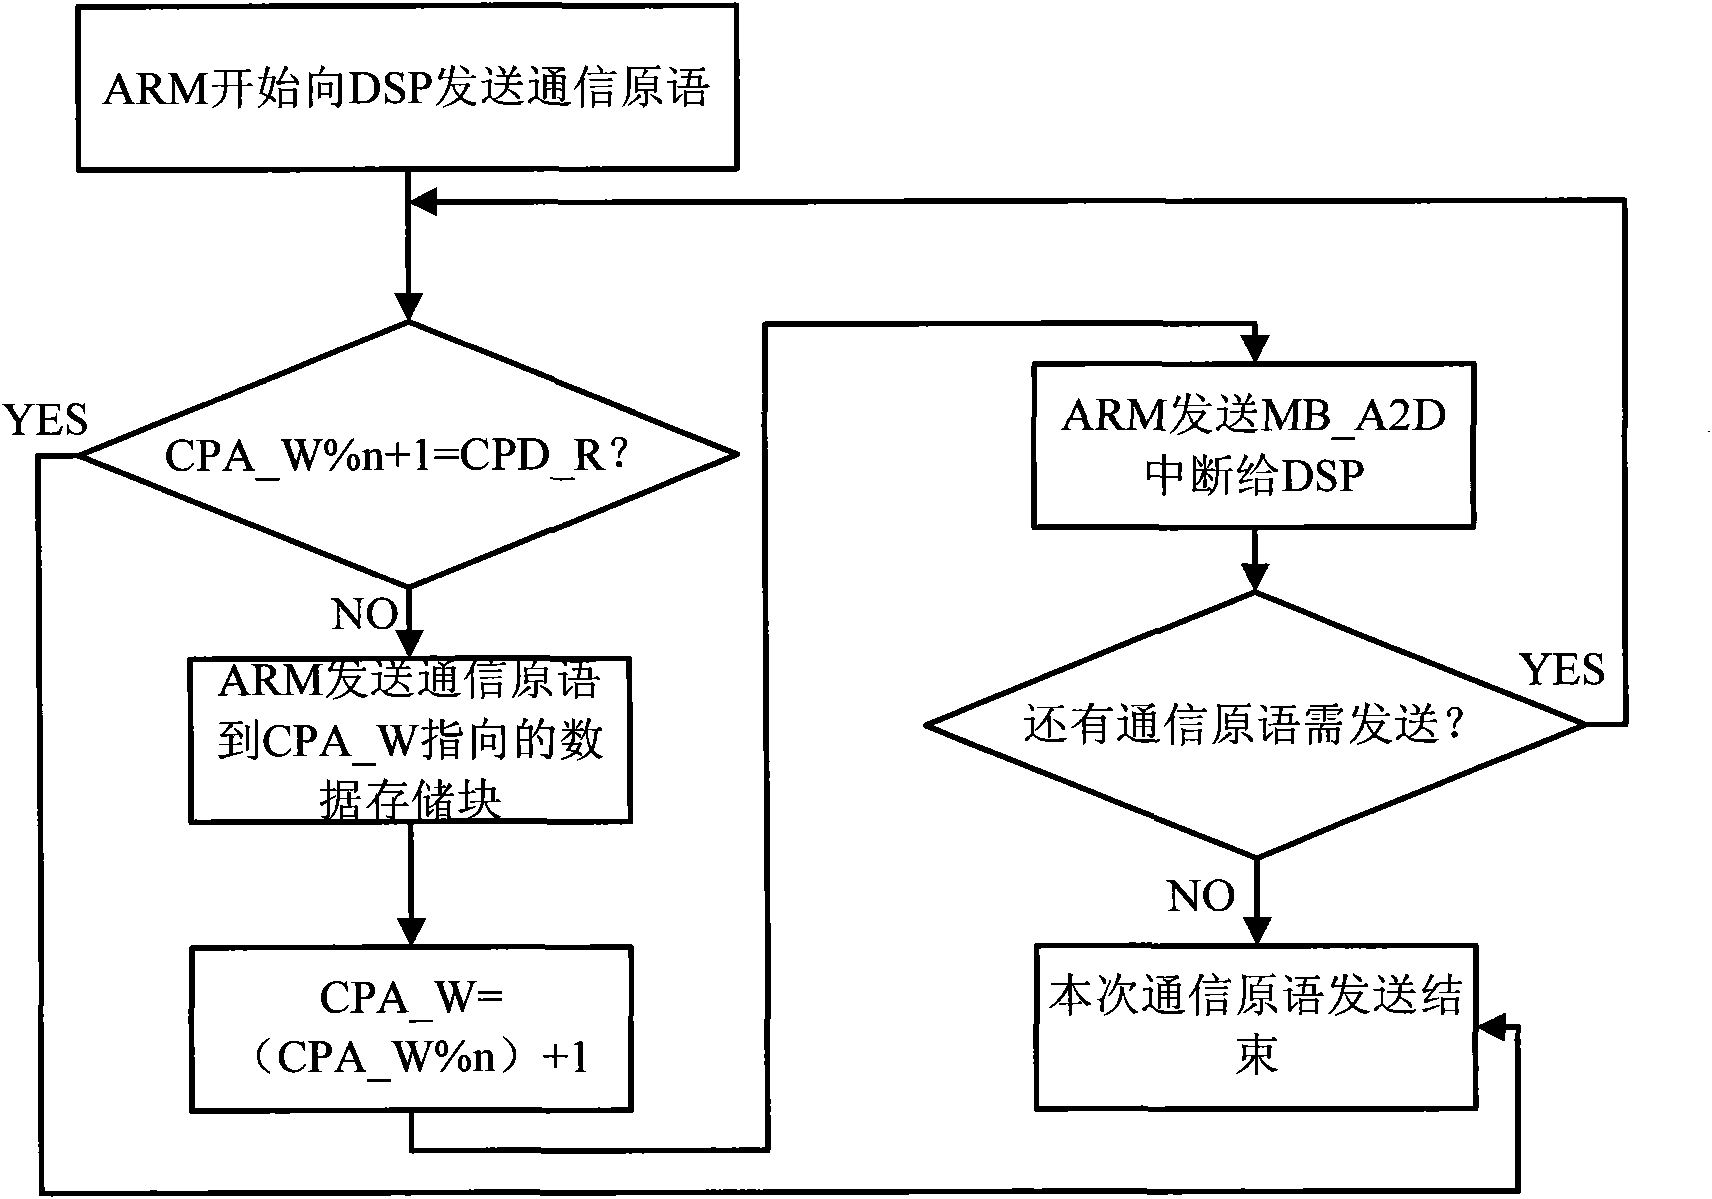 Communication method between inner processors of chip